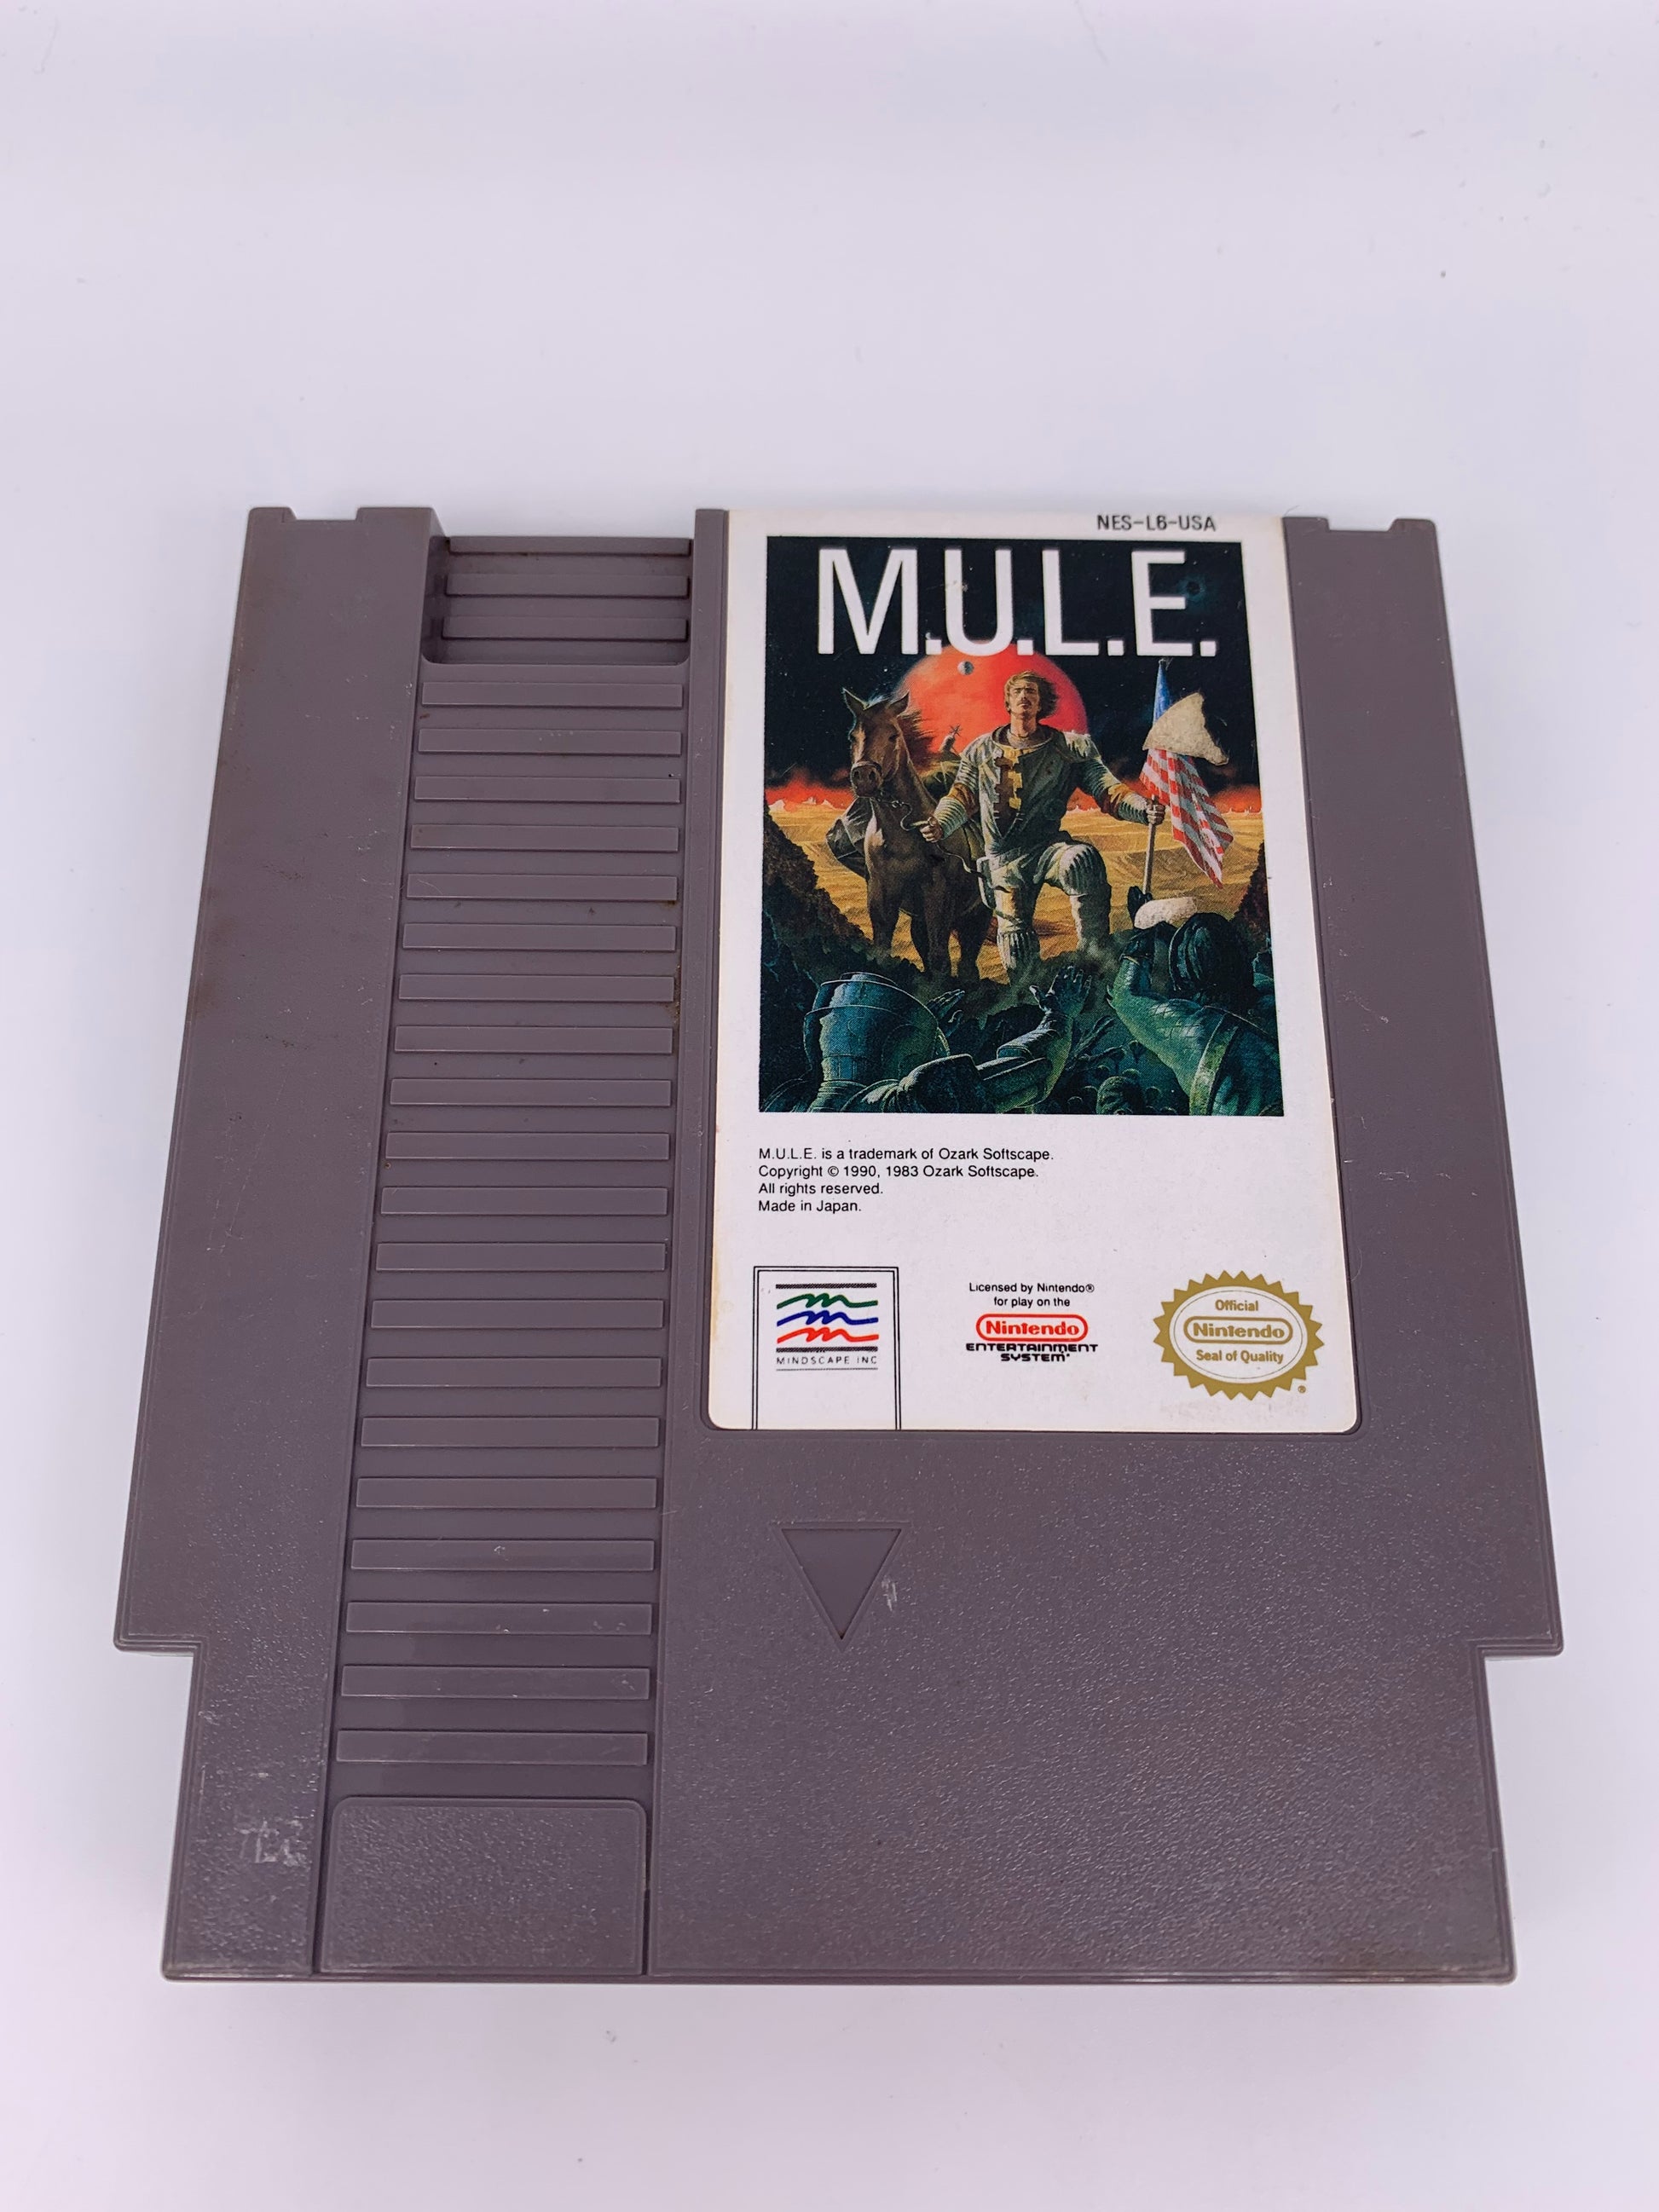 PiXEL-RETRO.COM : NINTENDO ENTERTAiNMENT SYSTEM (NES) GAME NTSC MULE M.U.L.E